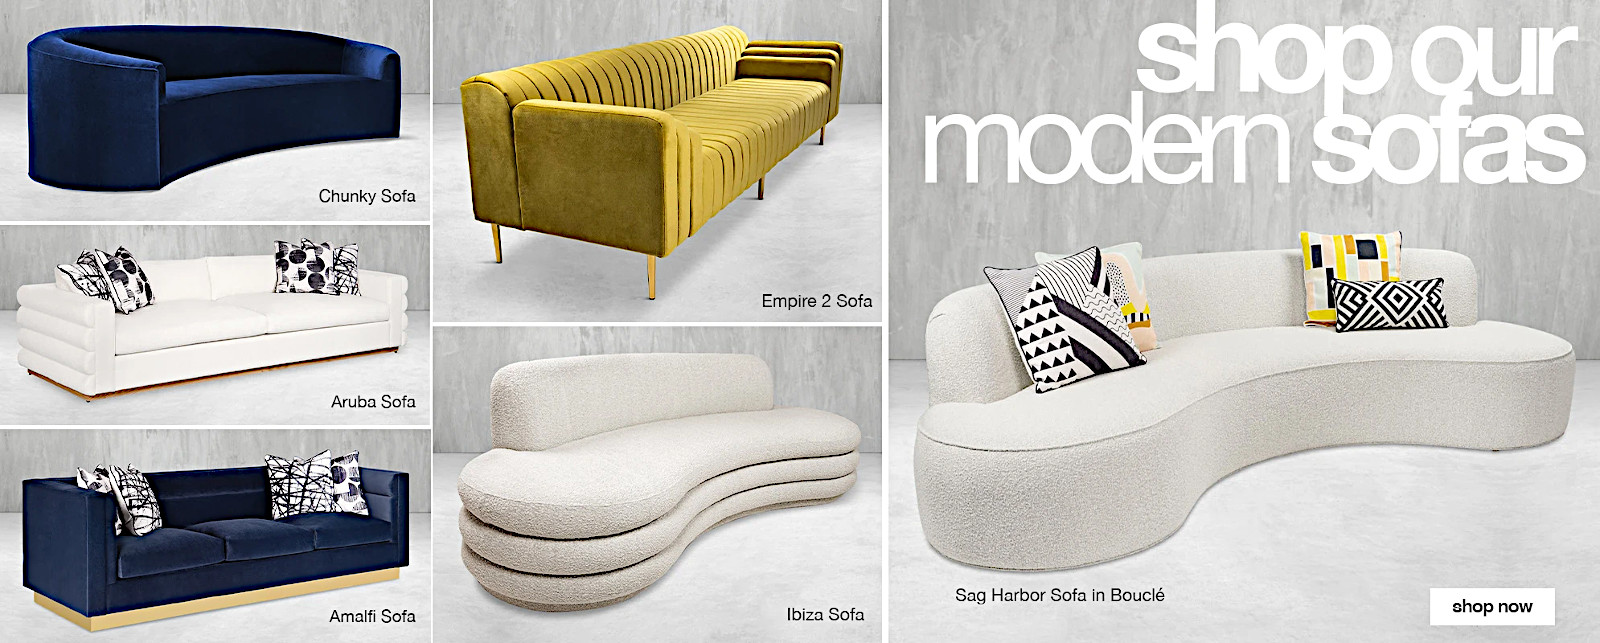 Low-priced modern sofas